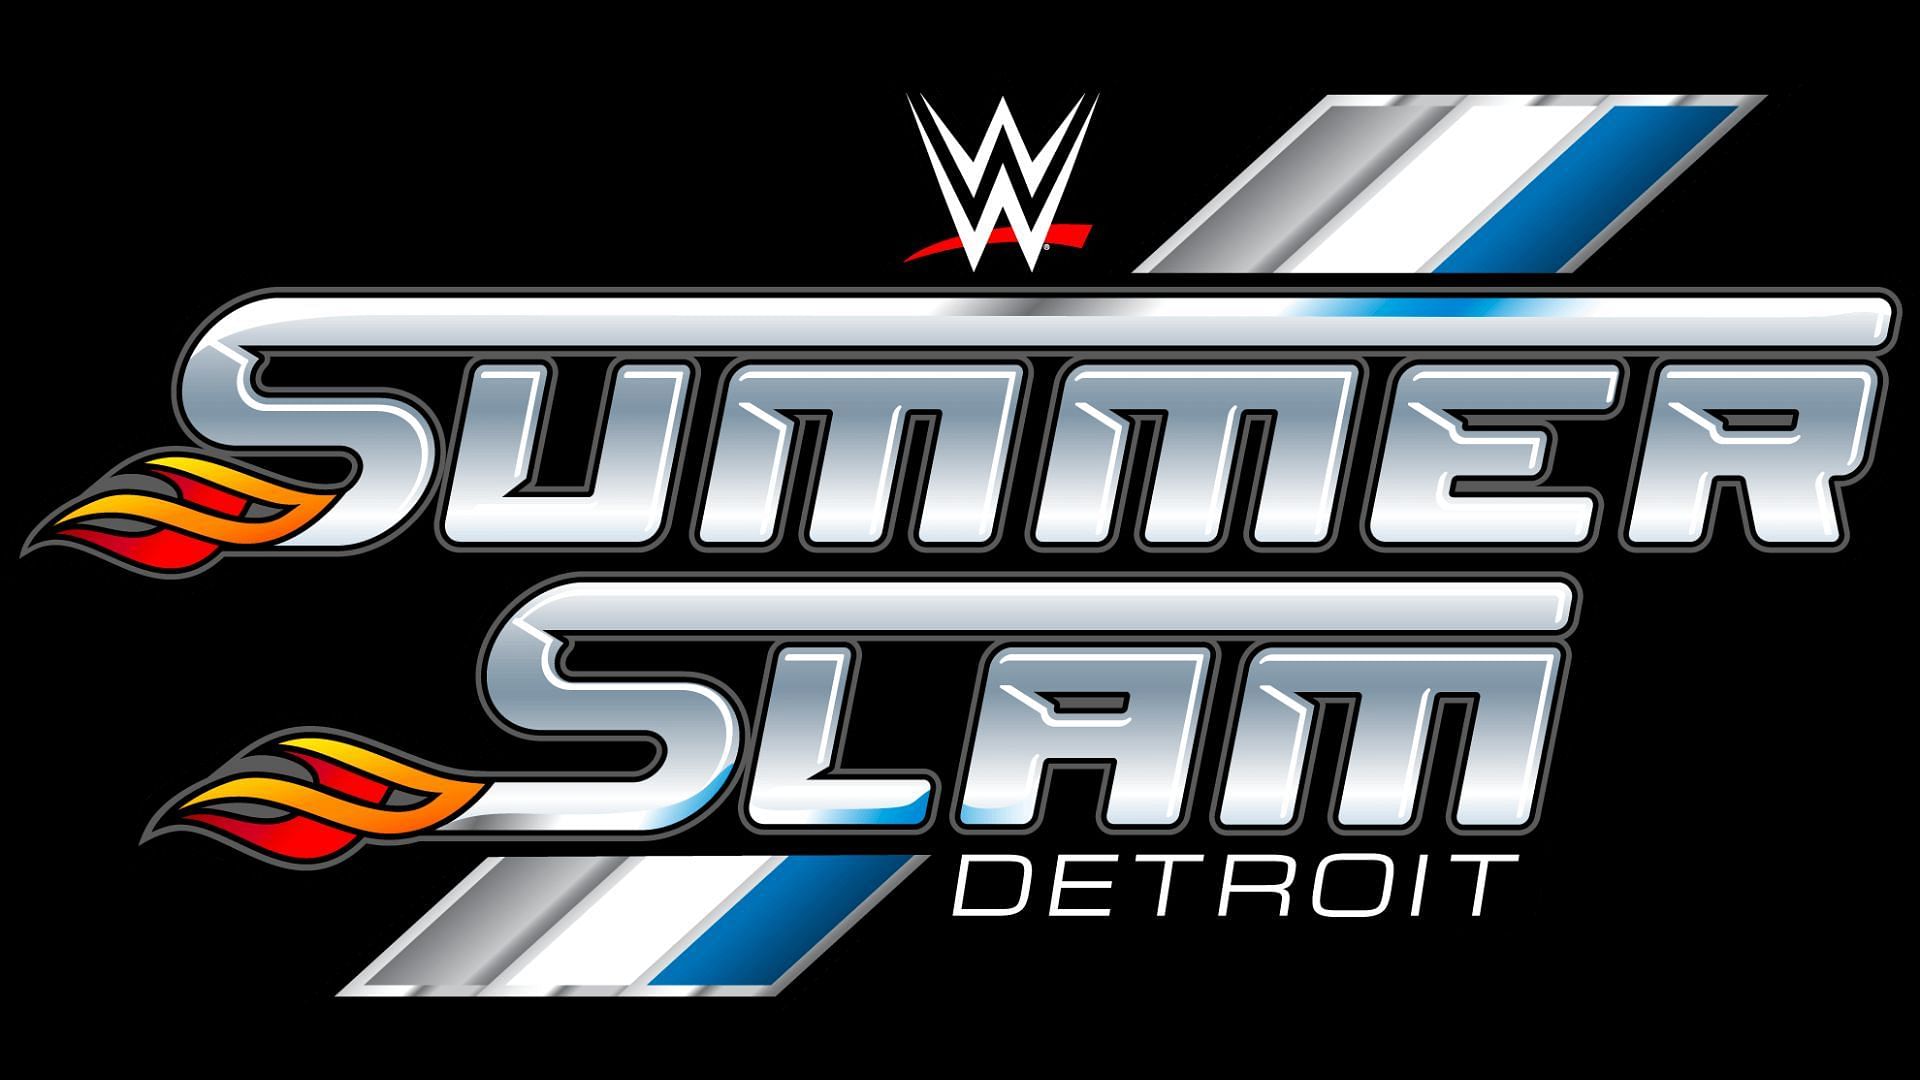 WWE SummerSlam will take place in Detroit!